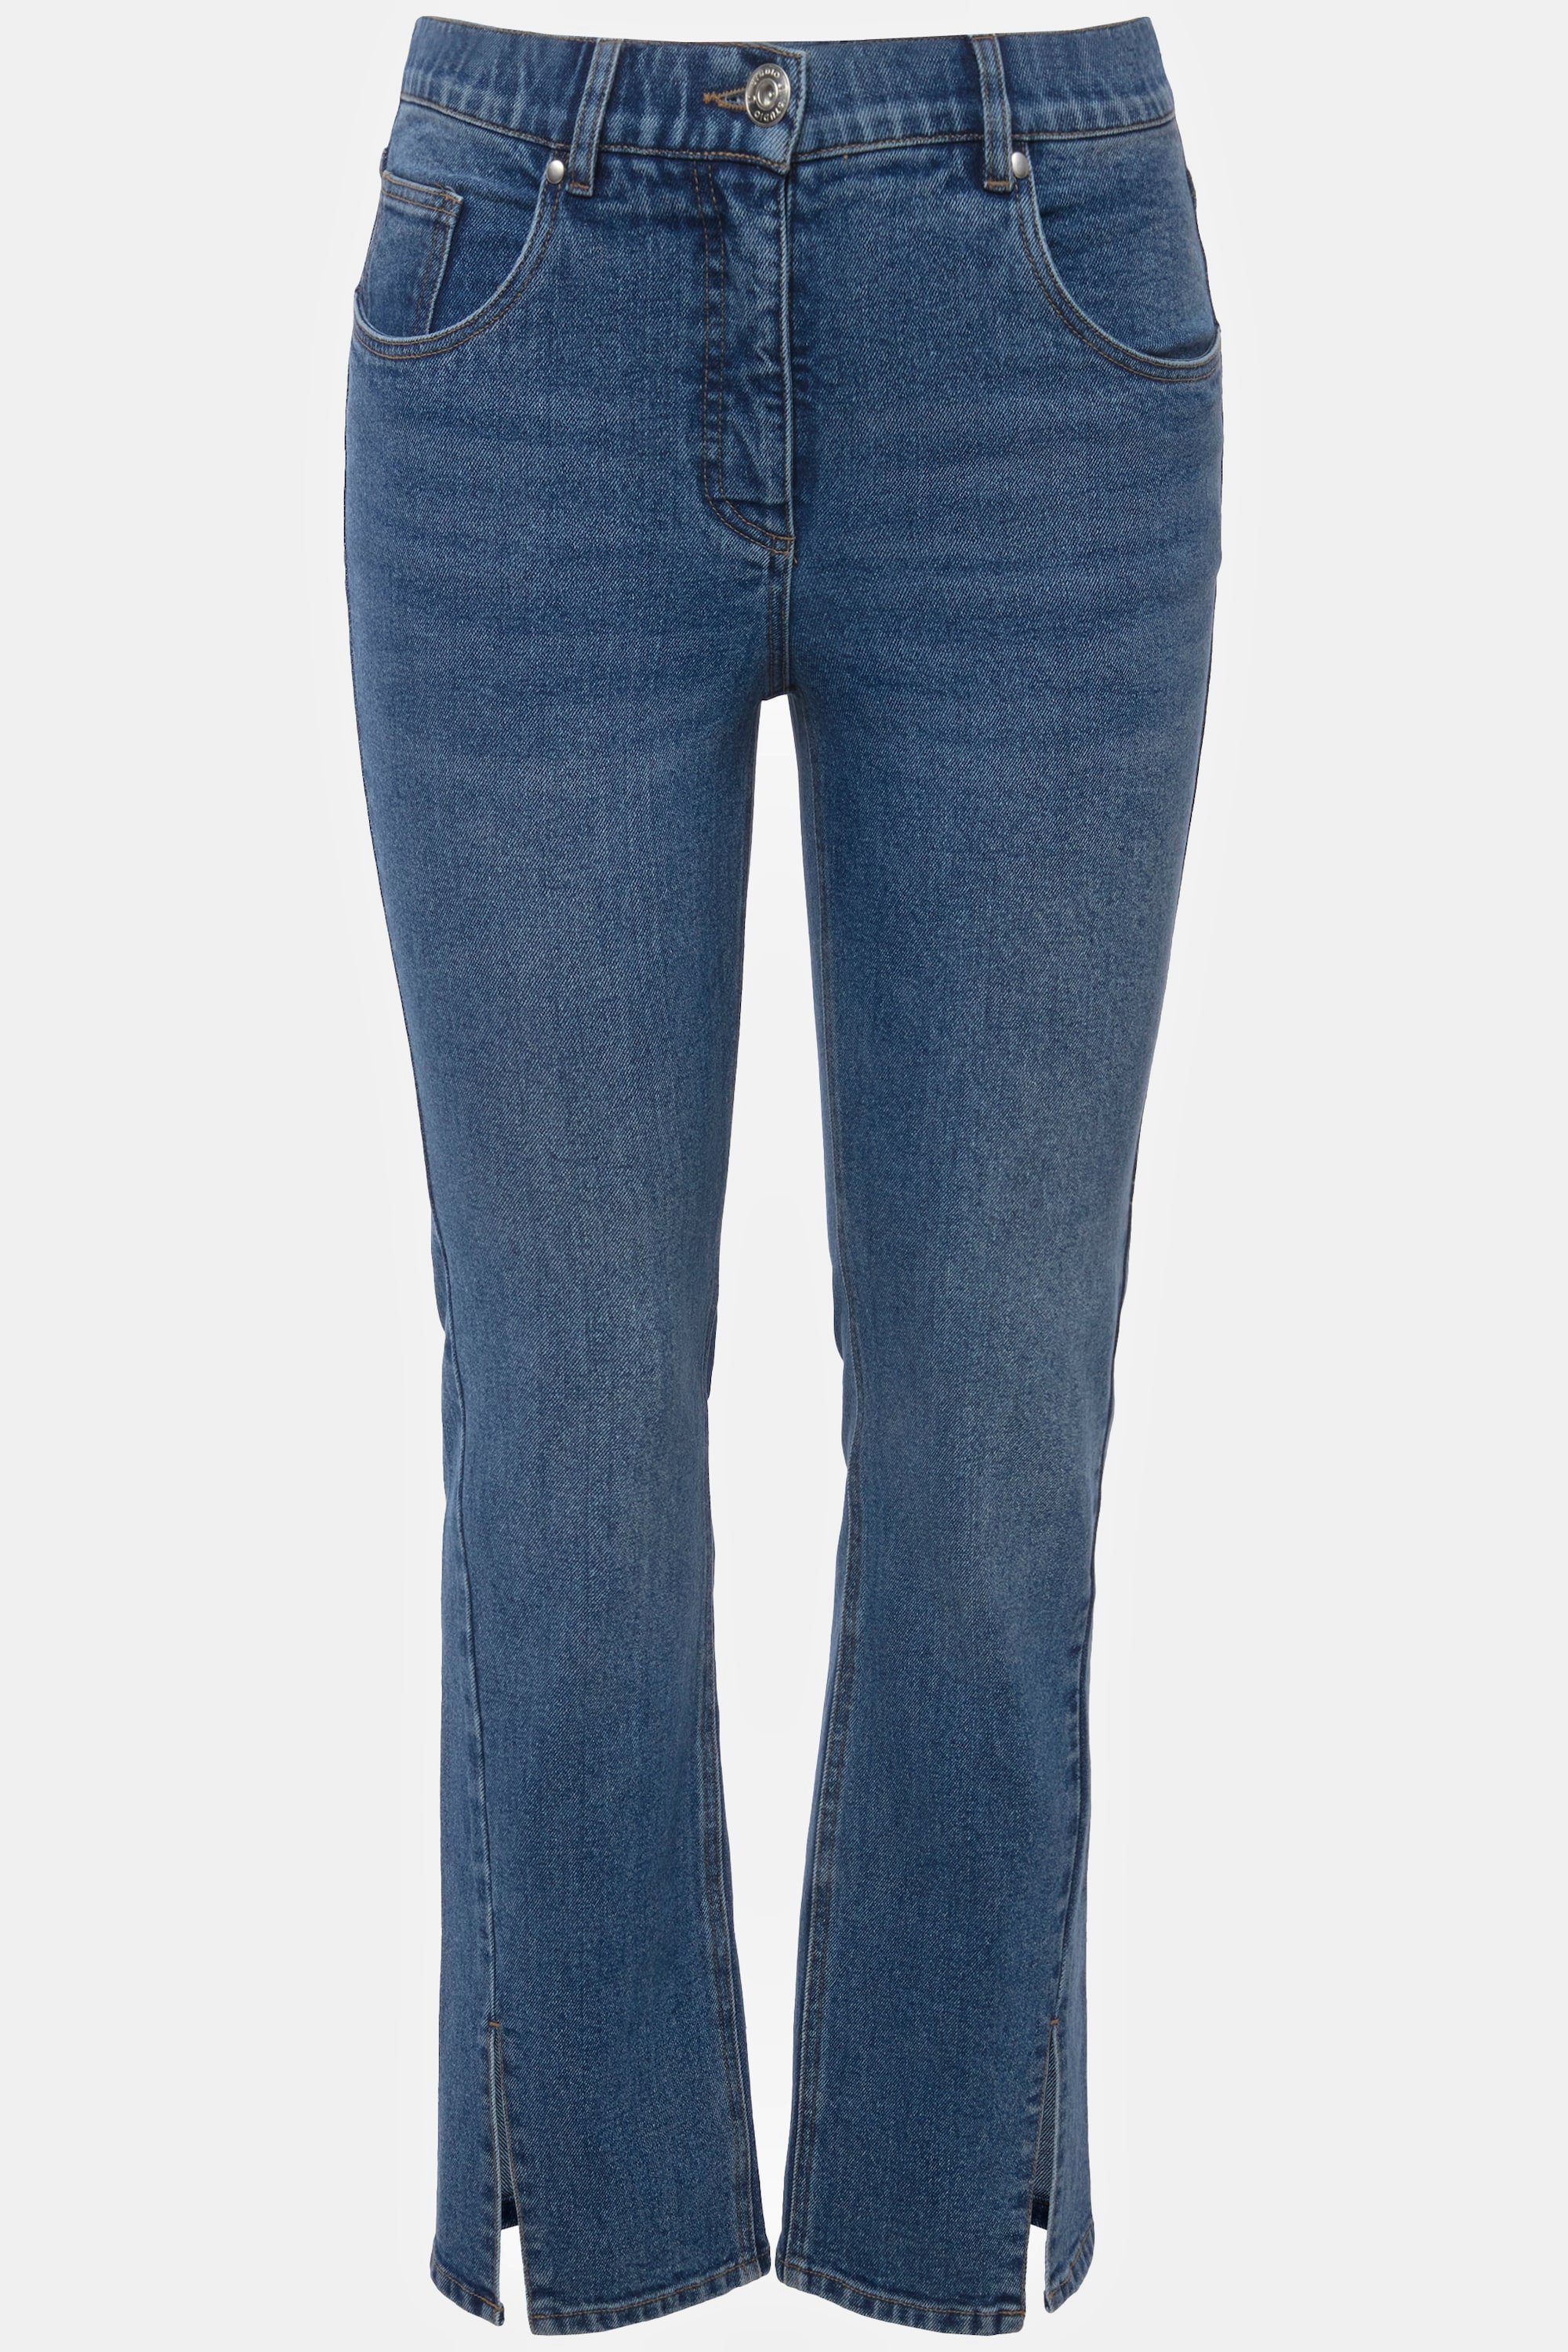 Studio Untold Funktionshose Jeans 5-Pocket Saumschlitz Straight Fit